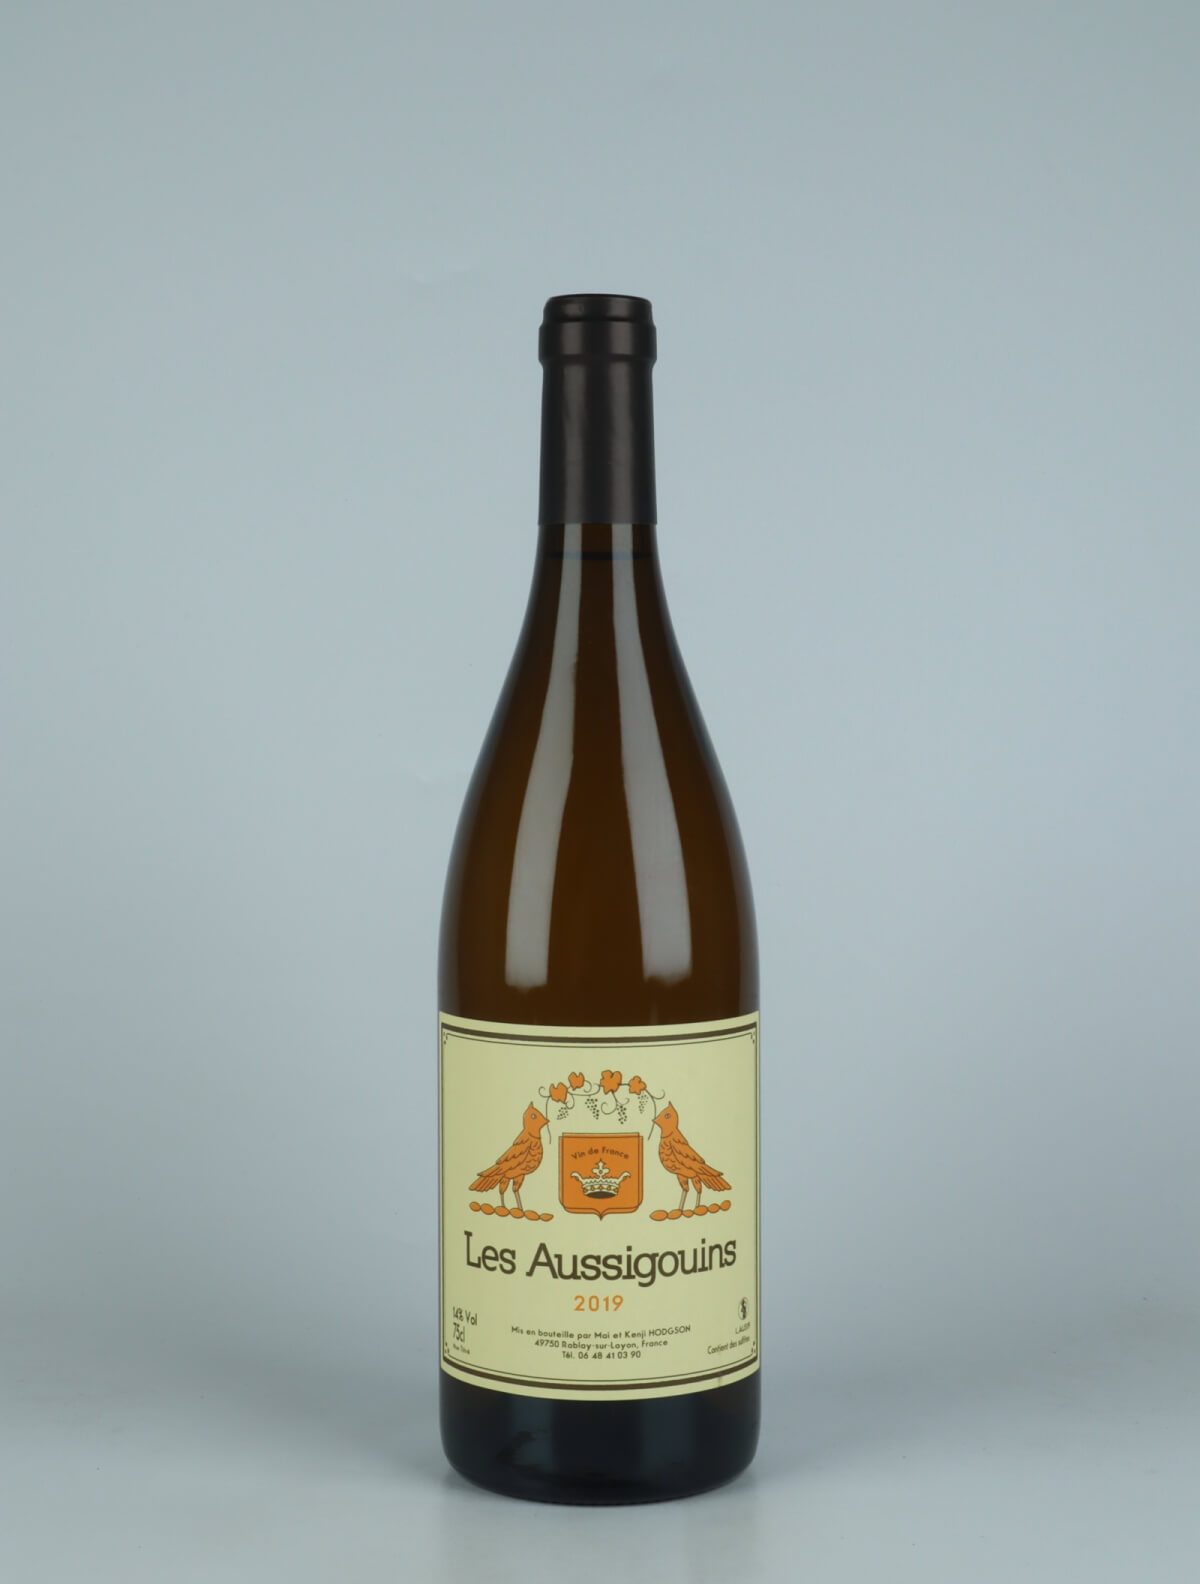 A bottle 2019 Les Aussigouins White wine from Mai et Kenji Hodgson, Loire in France